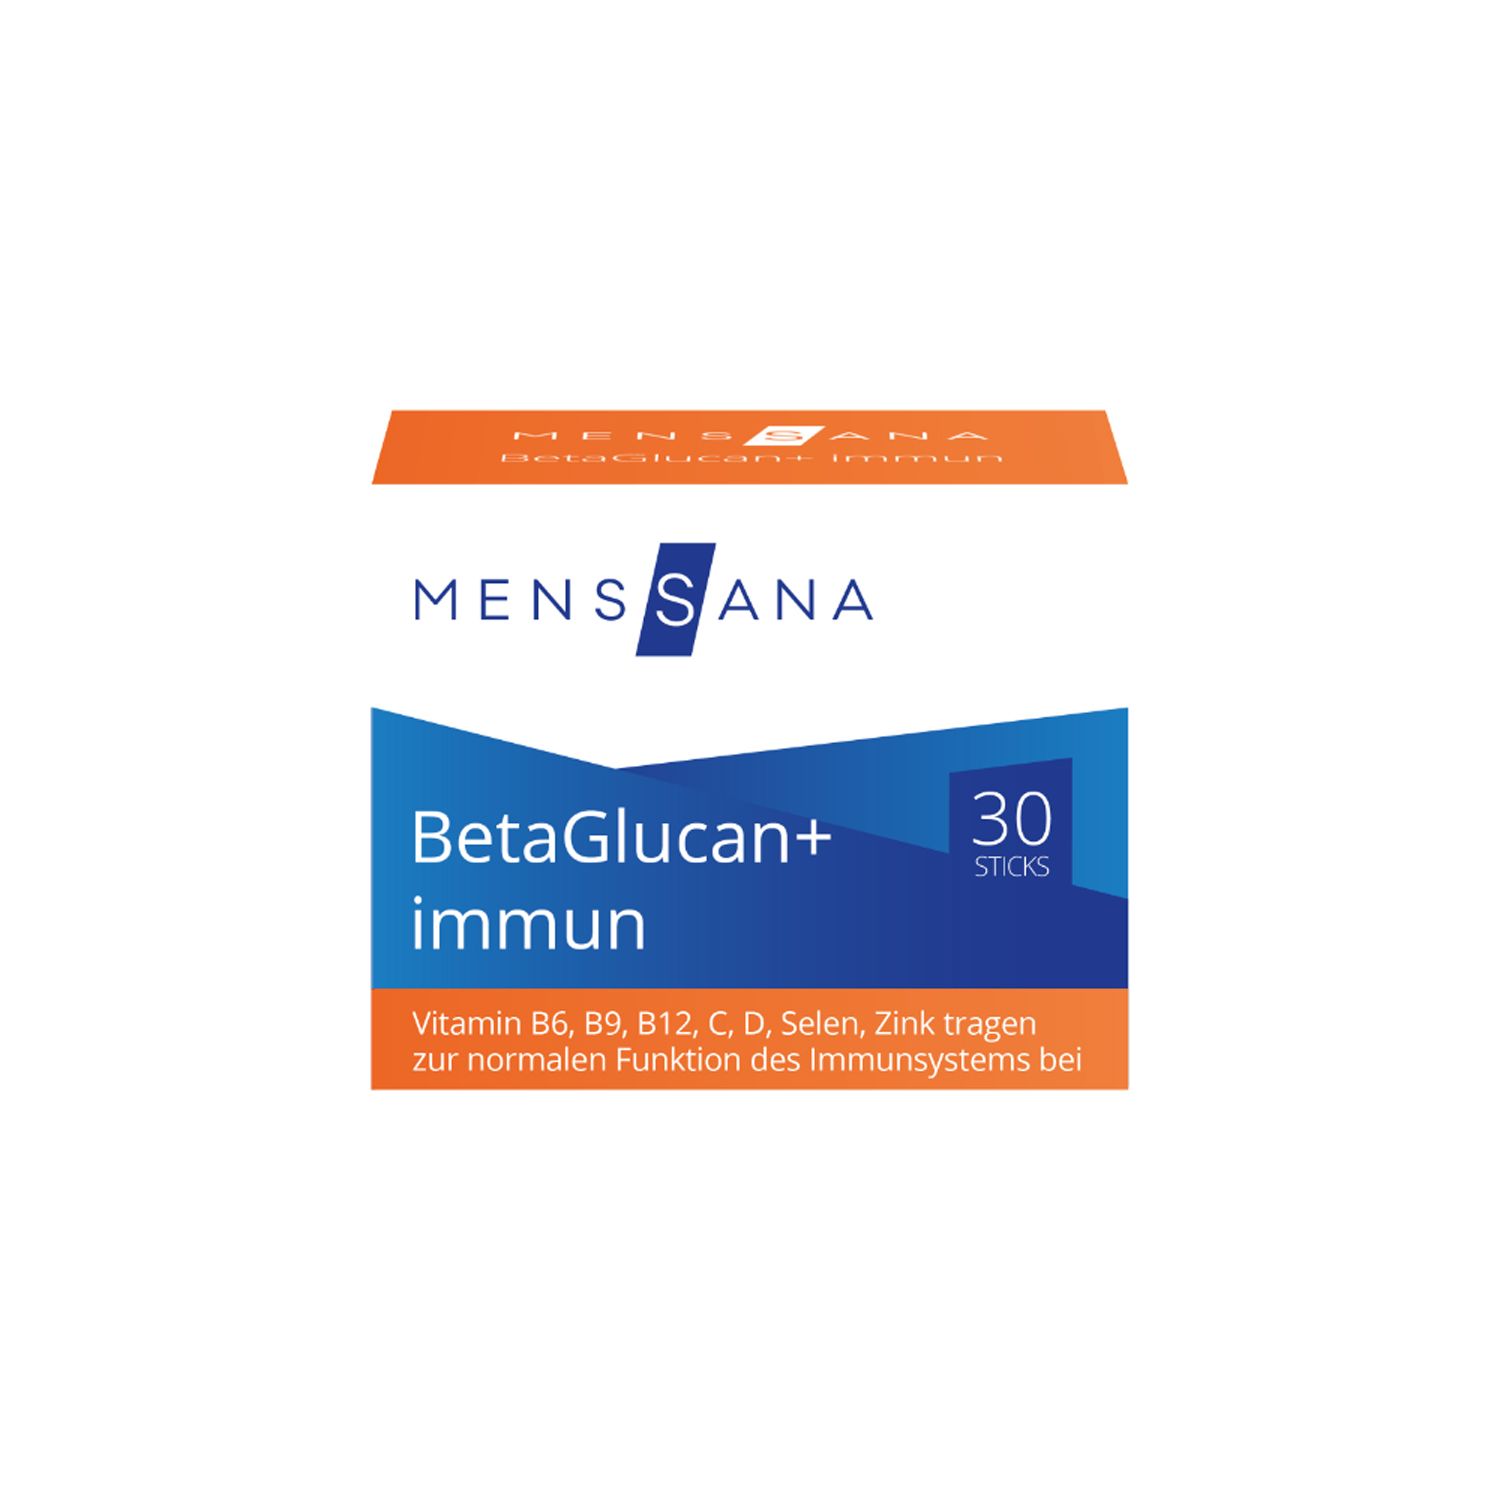 MENSSANA BetaGlucan + immun